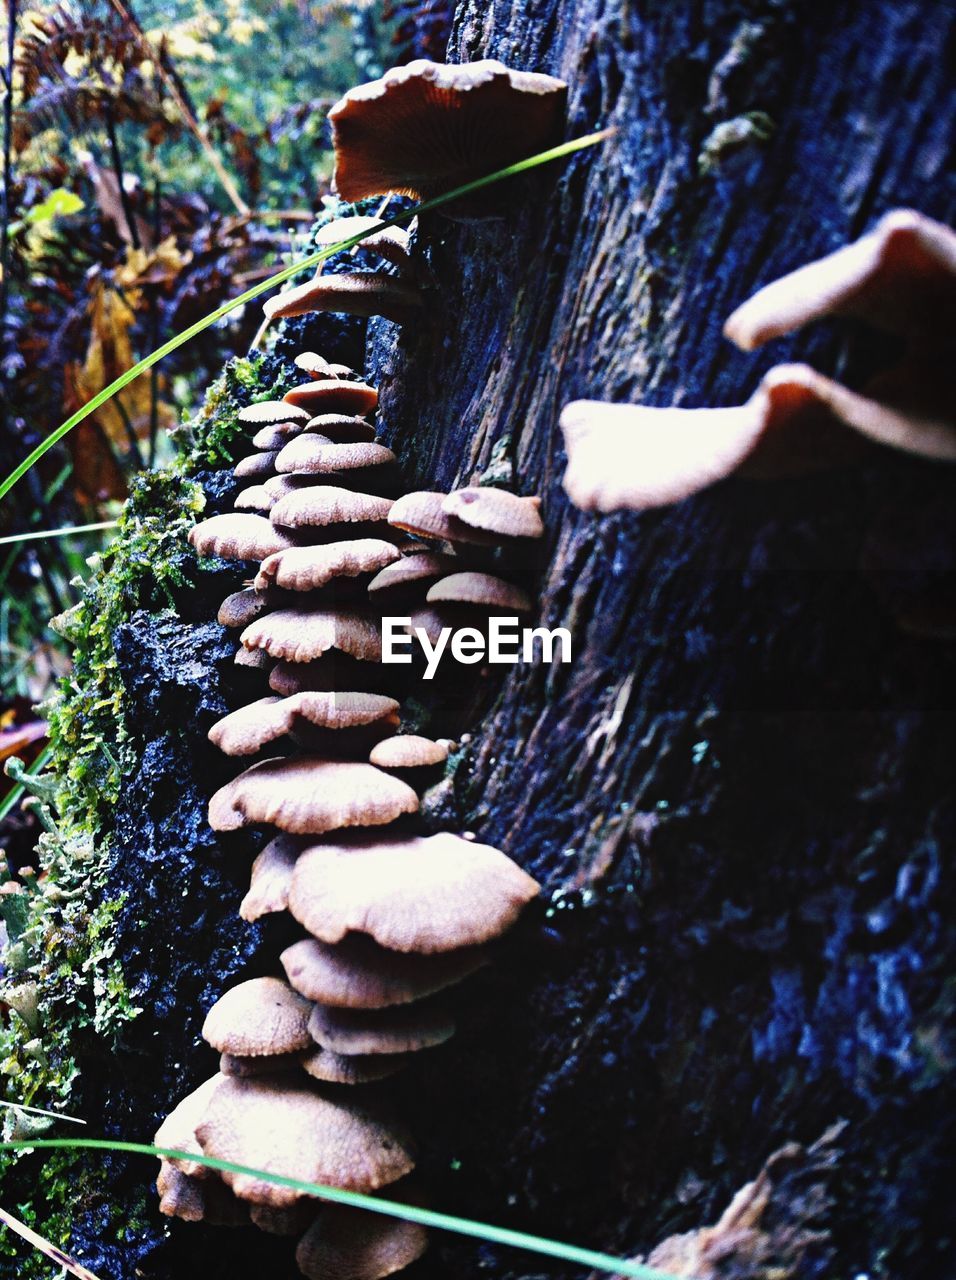 View of mushroom on tree trunk